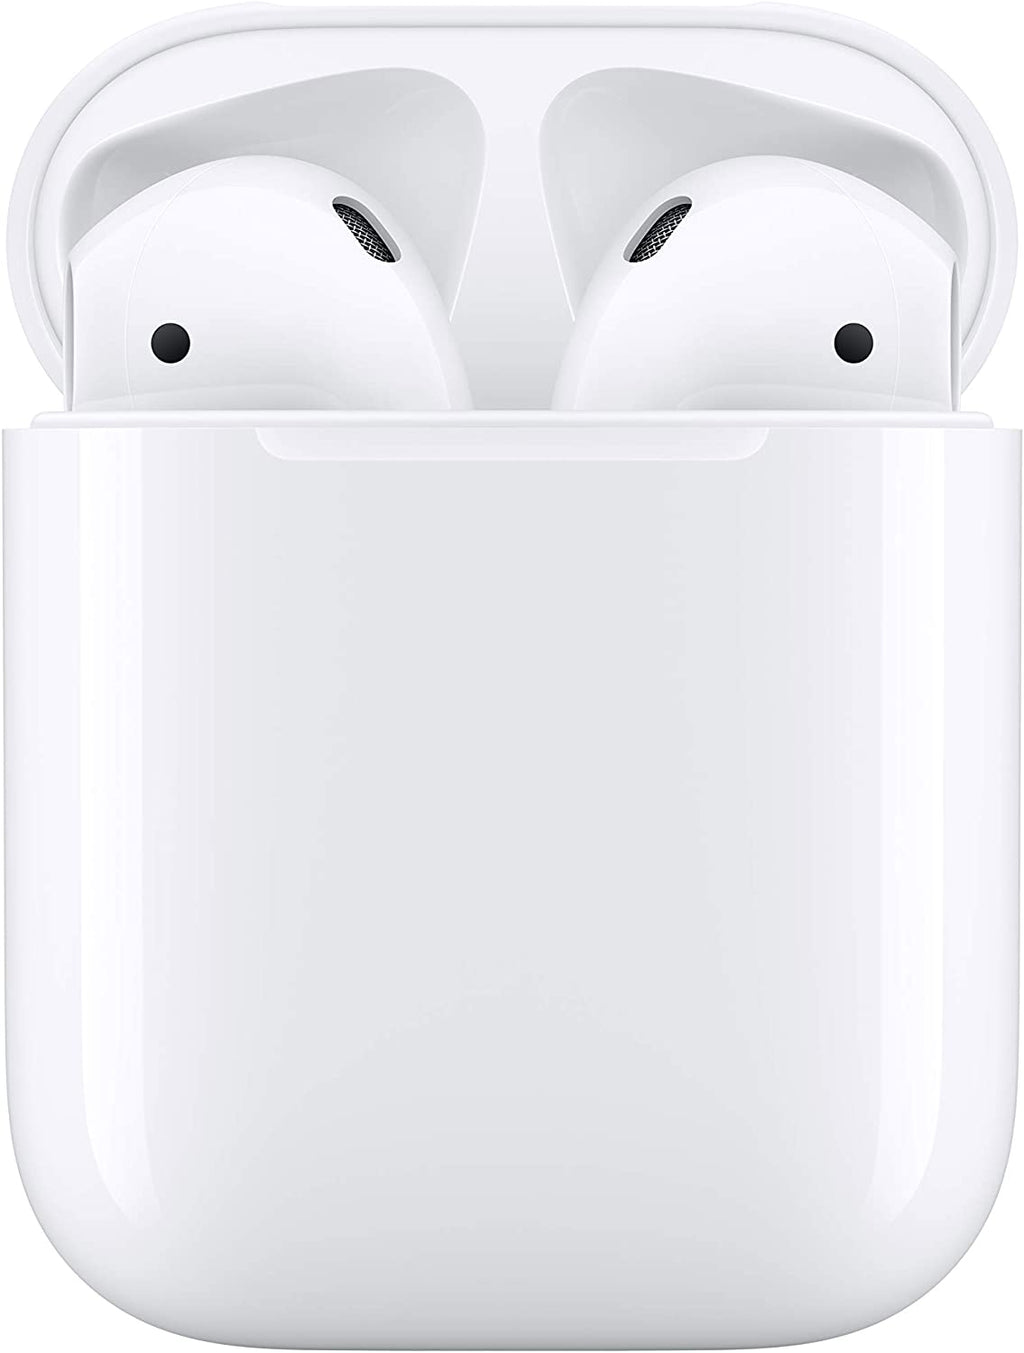 WM3 Apple AirPods w/Charging Case - Refurbished